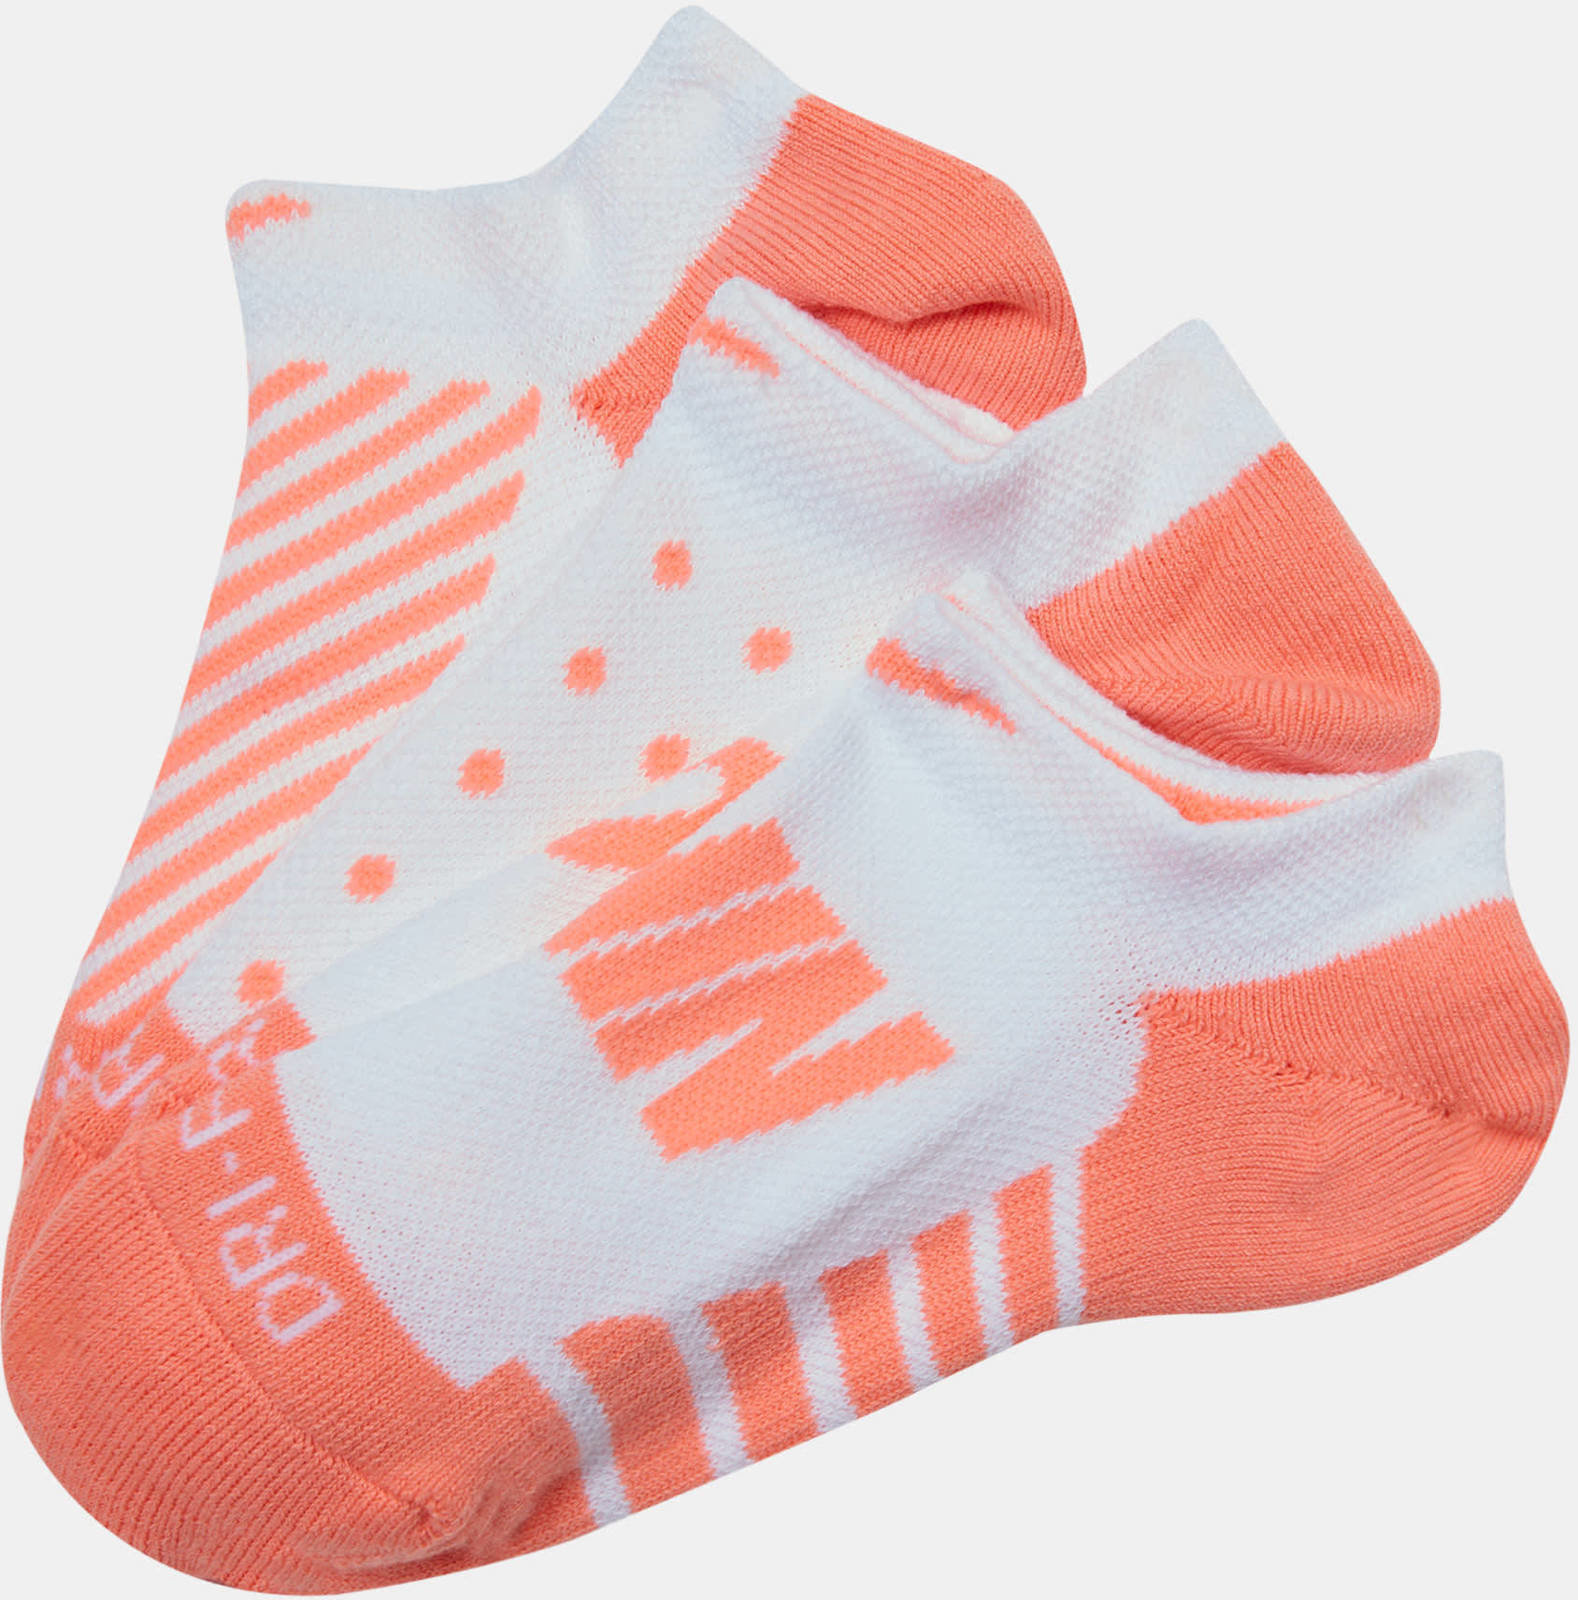 Socks Nike Womens Golf Cush Ns 3Pair White/Lt Atomic Pink/Lt Atomic Pink S